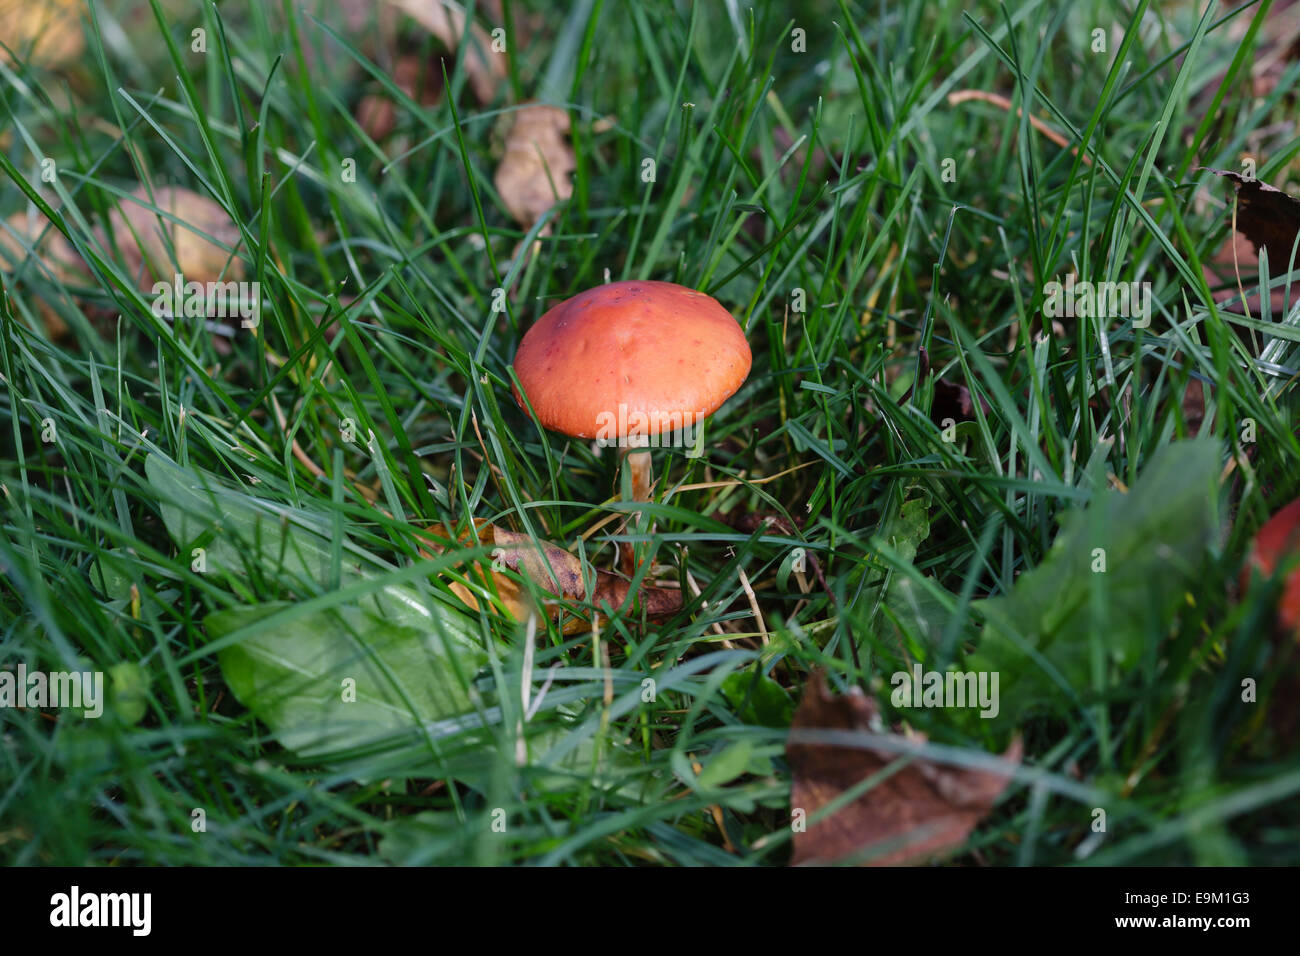 Wild mushroom in a field / in the grass Stock Photo